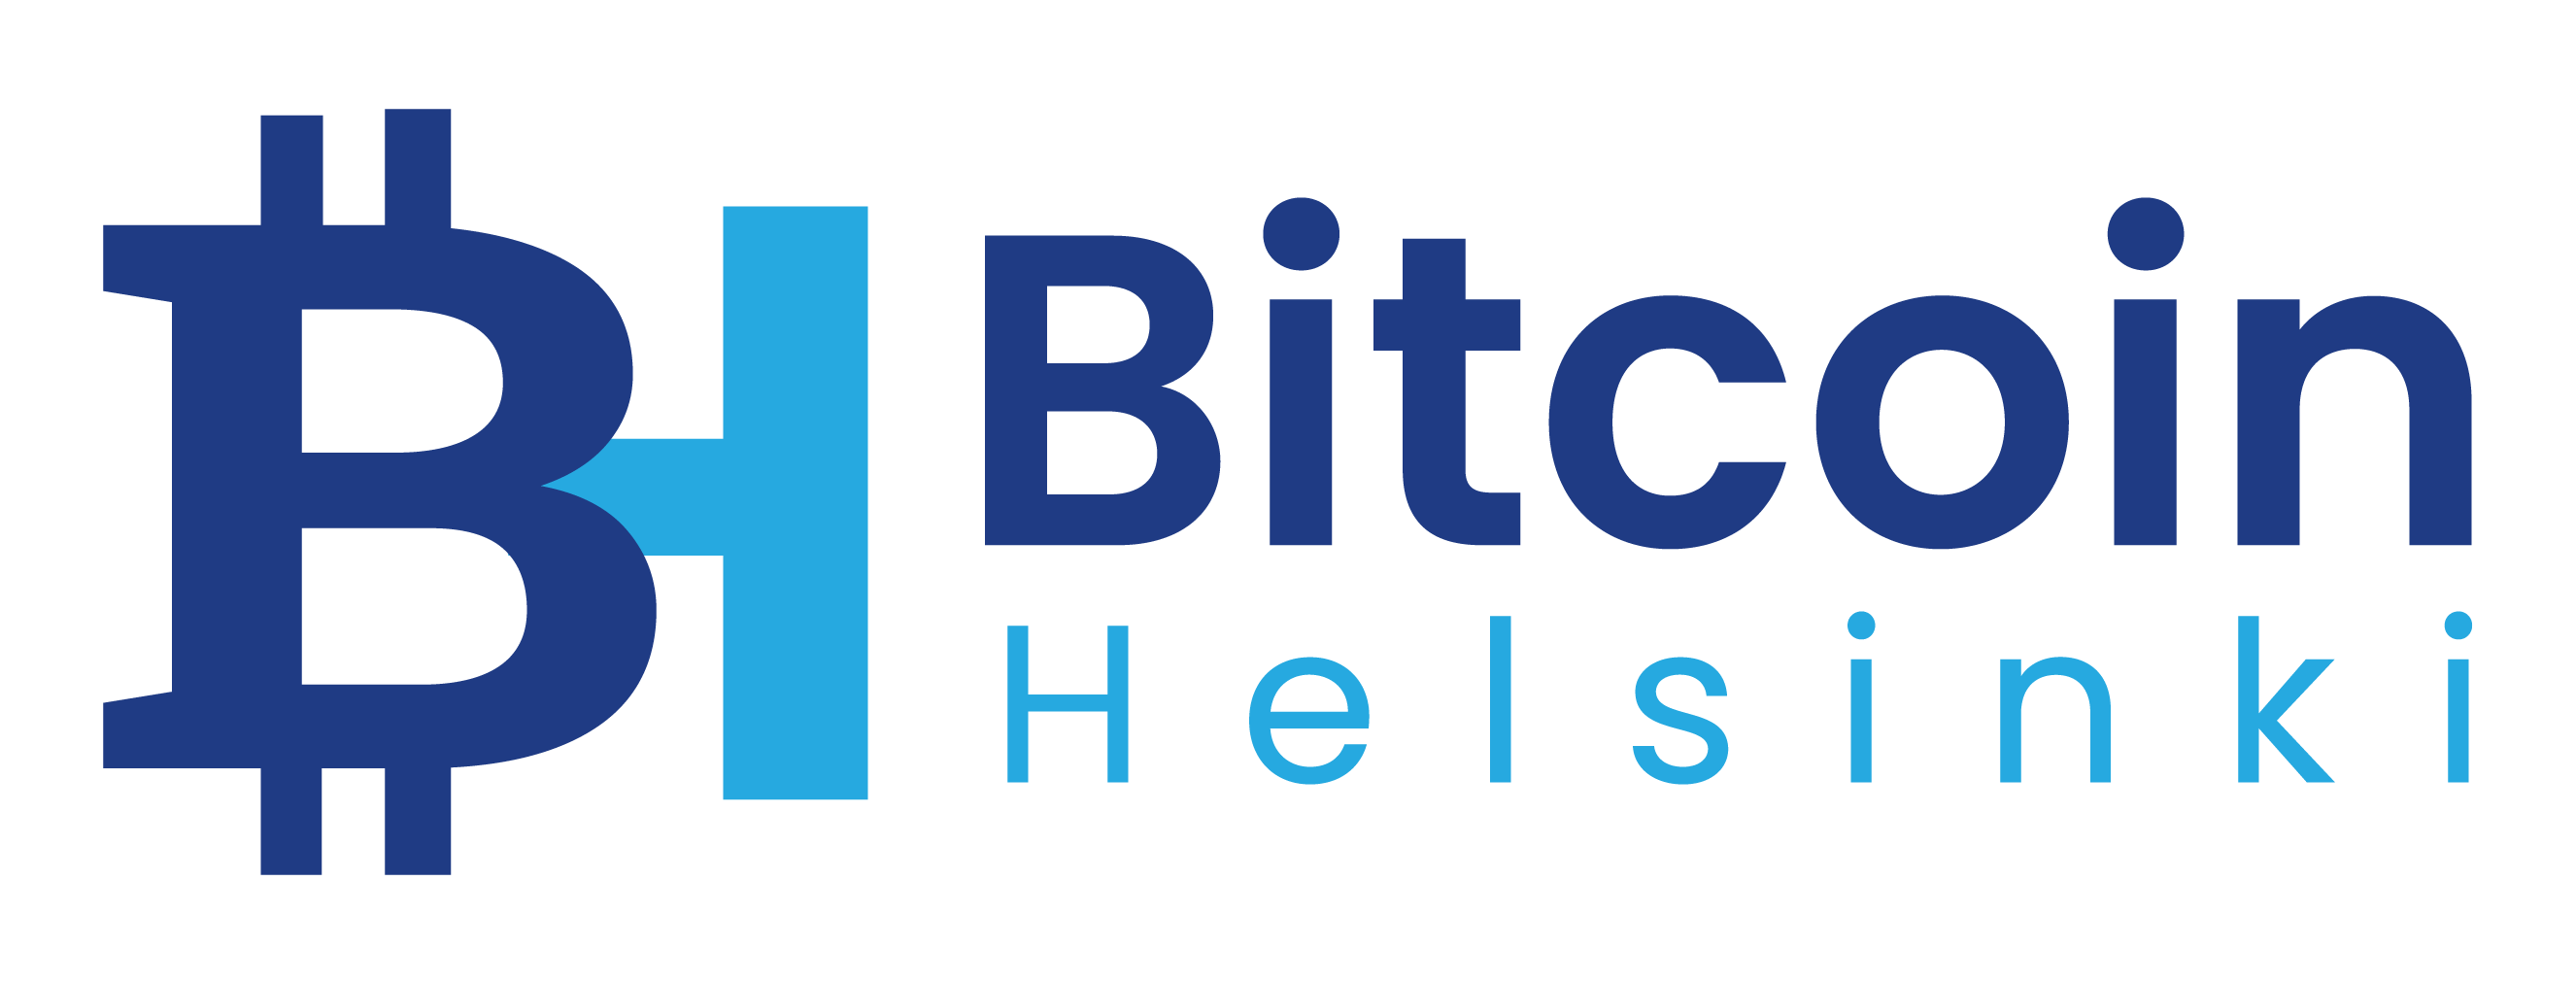 Bitcoin Helsinki - Makipag-ugnayan sa amin